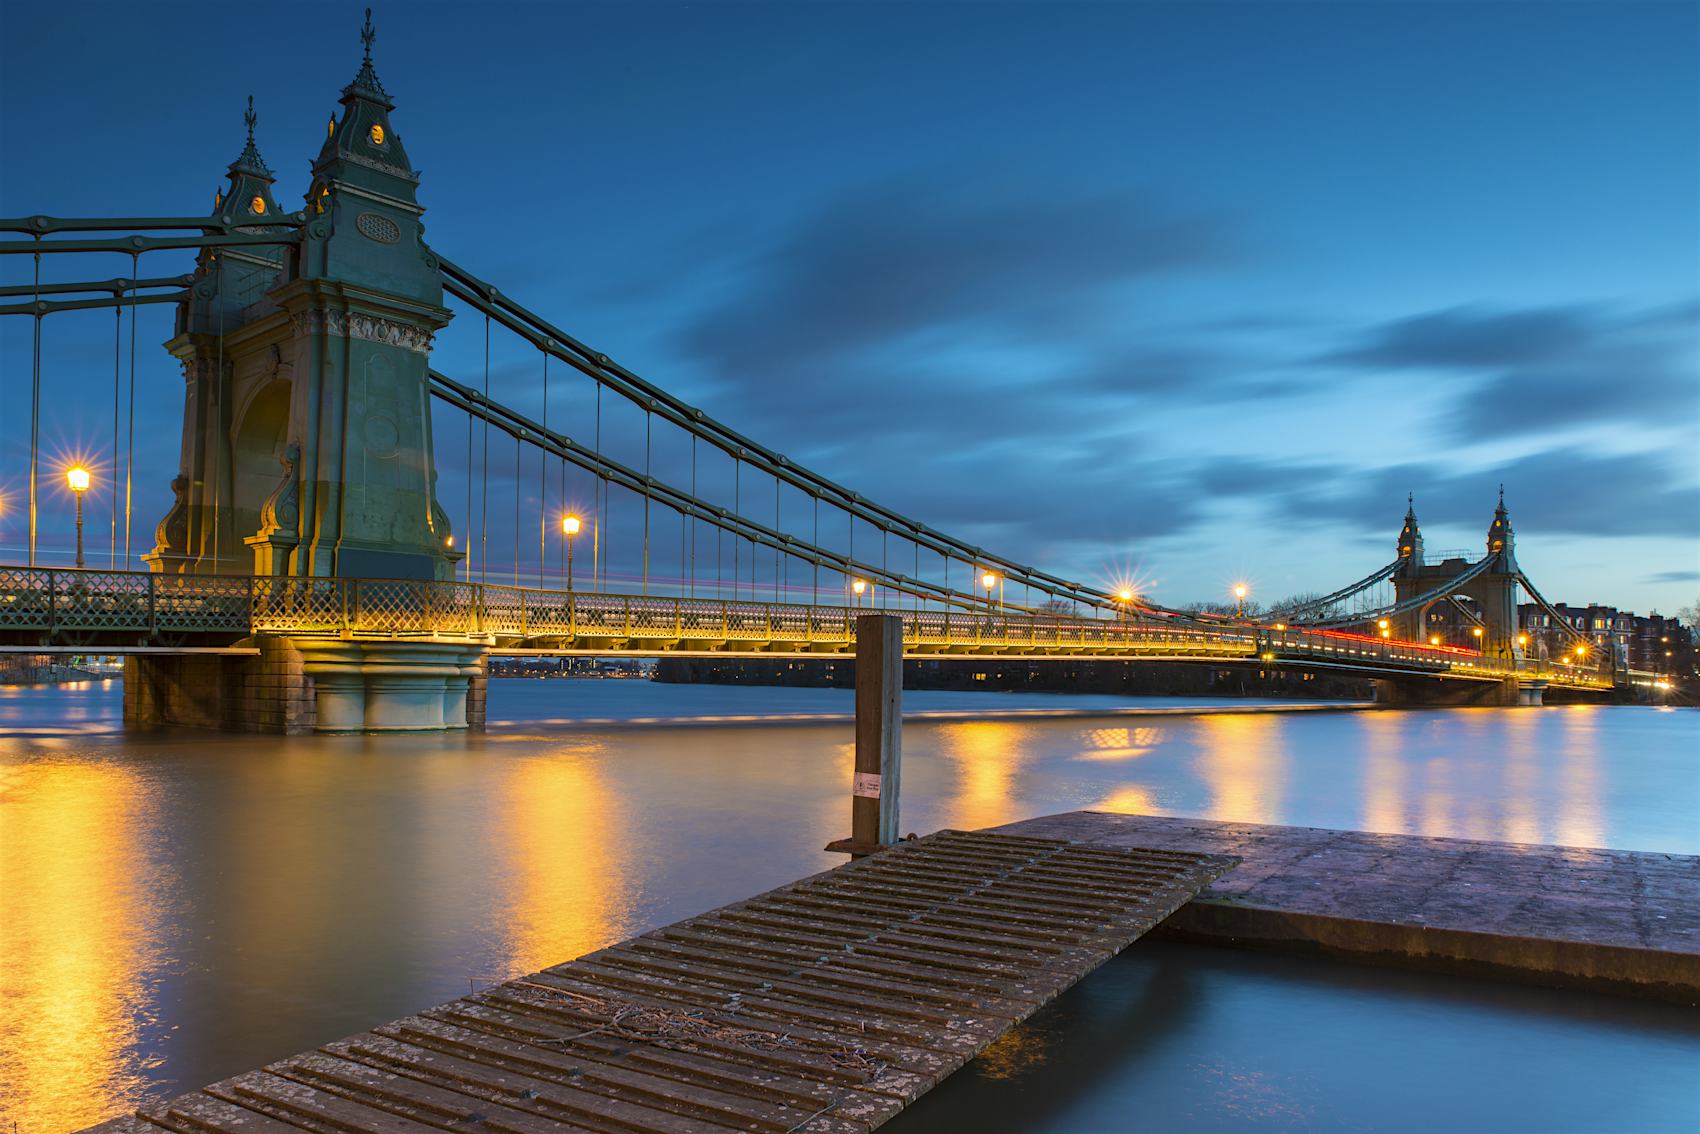 The now car free Hammersmith Bridge in London